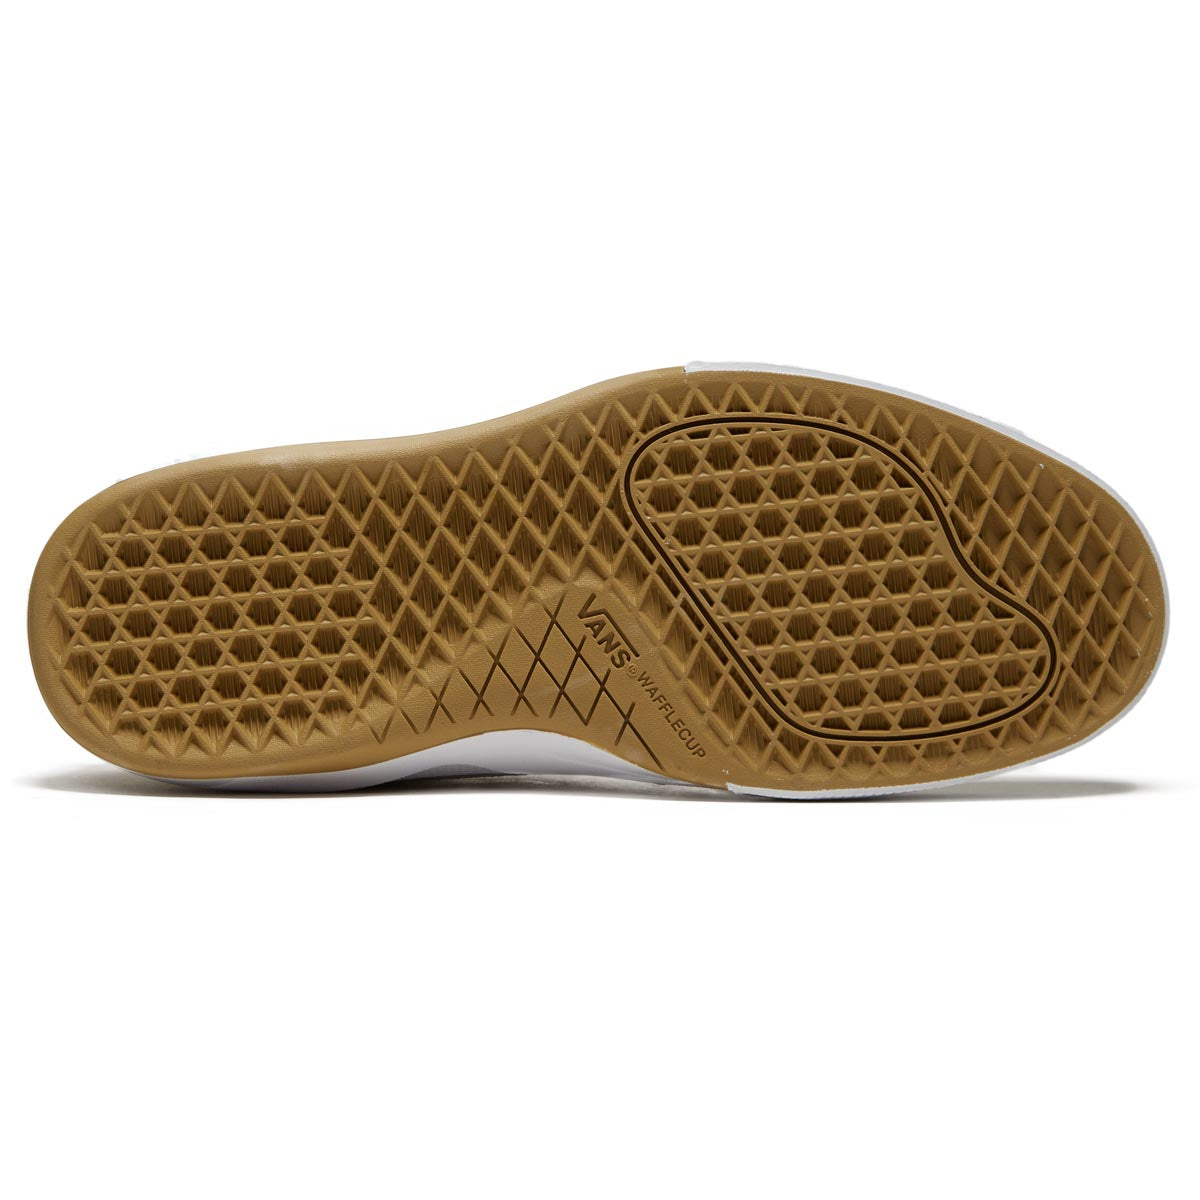 Vans Wayvee Shoes - Leather Tan/White image 4